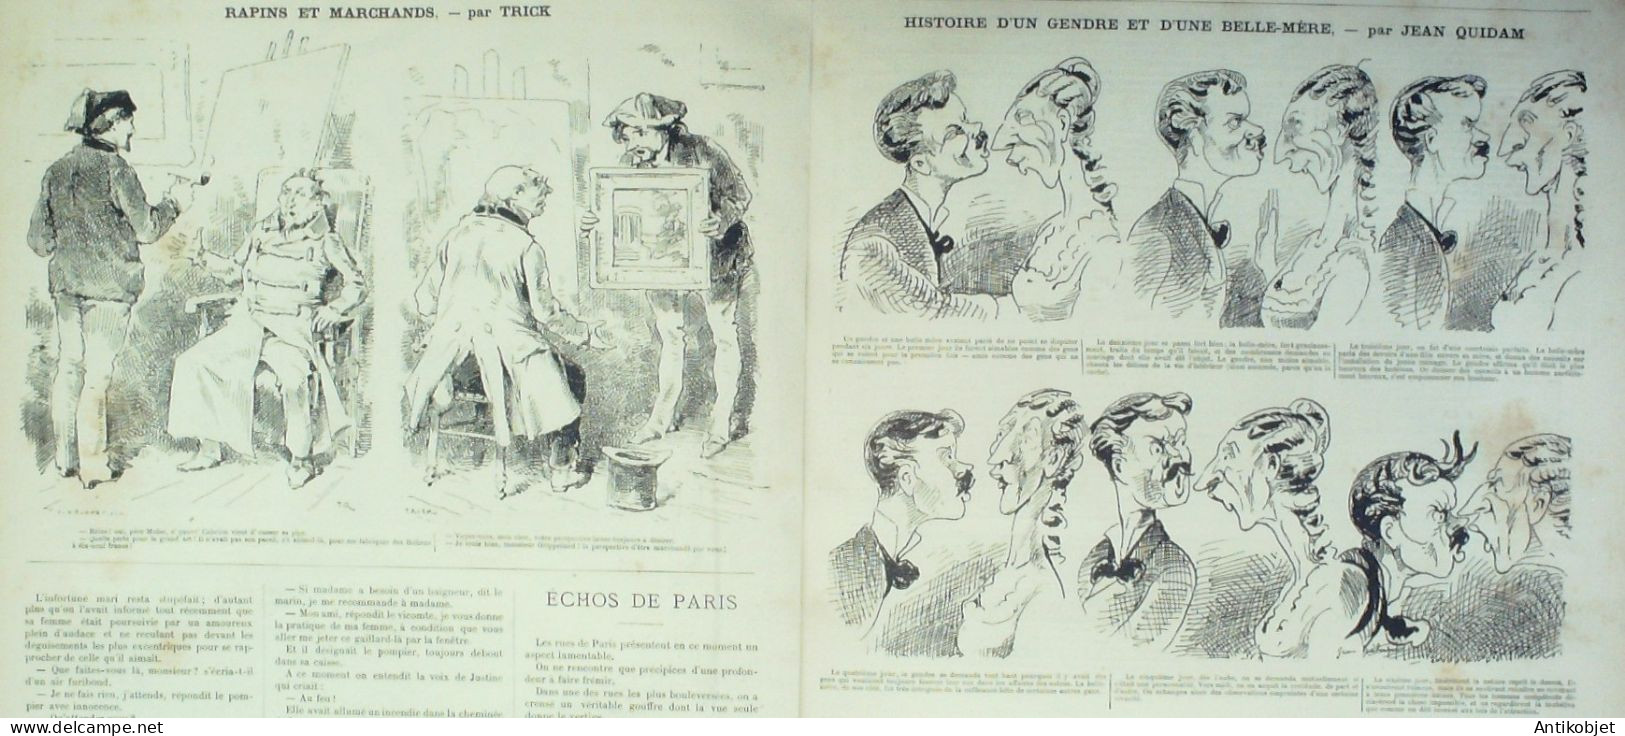 La Caricature 1880 N°  36 Voyage Au Pays De La Bière Robida Quidam Morland - Magazines - Before 1900